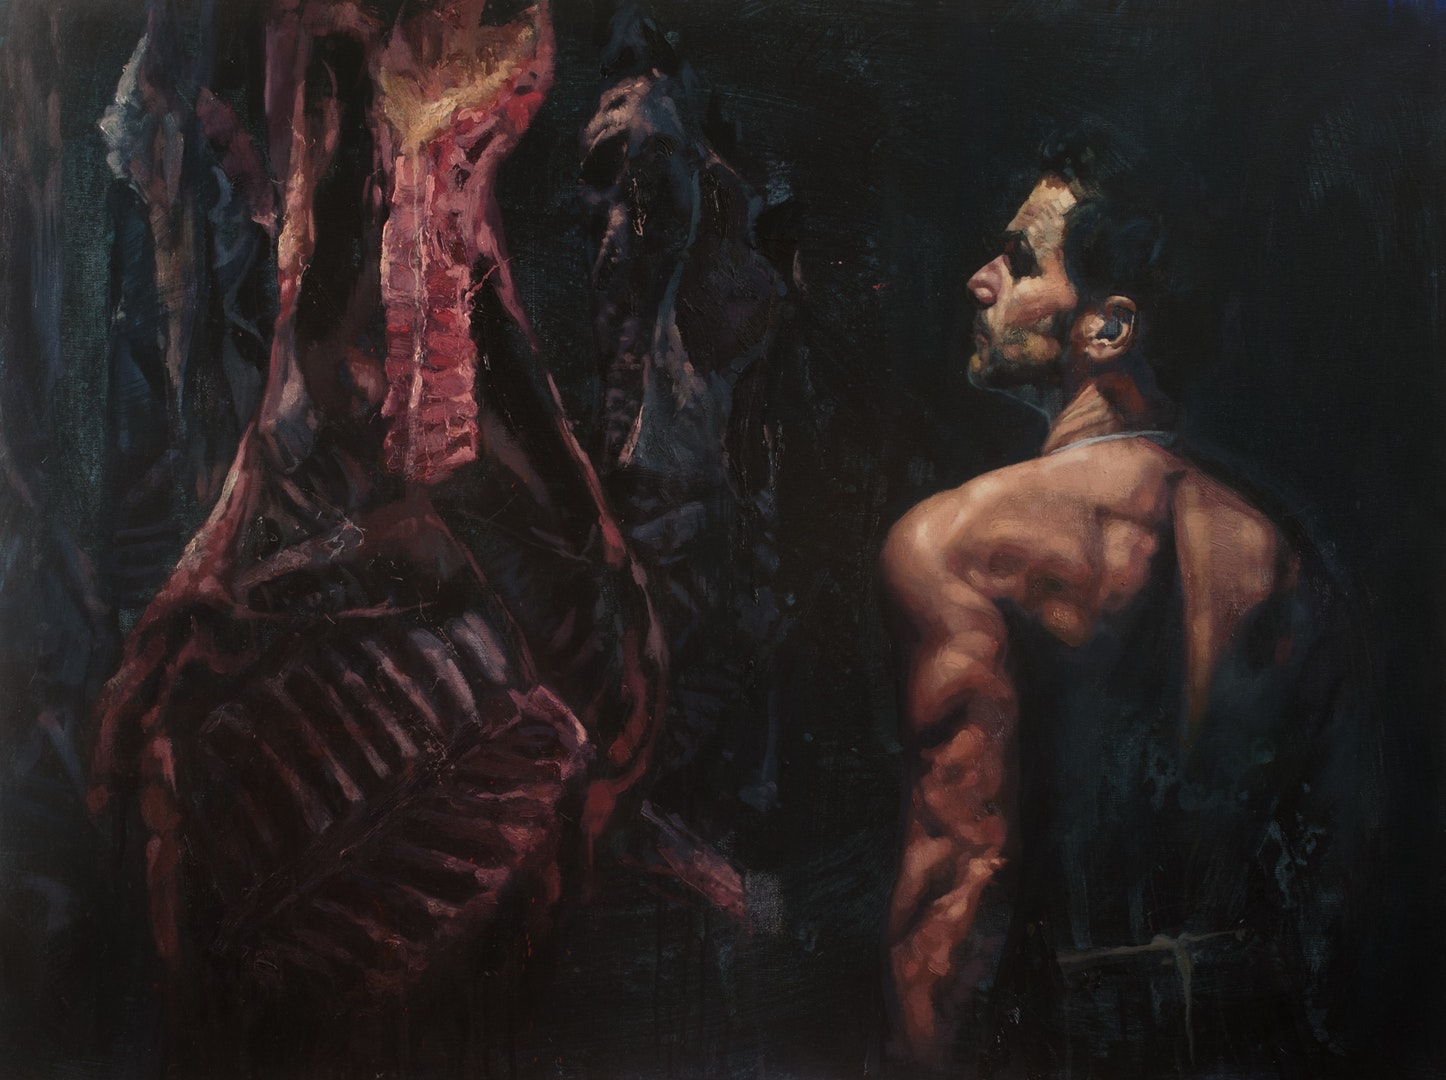 'Let them have dominion II', Daniel Cooke, Oil on canvas, 91 x 122 x 4 cm